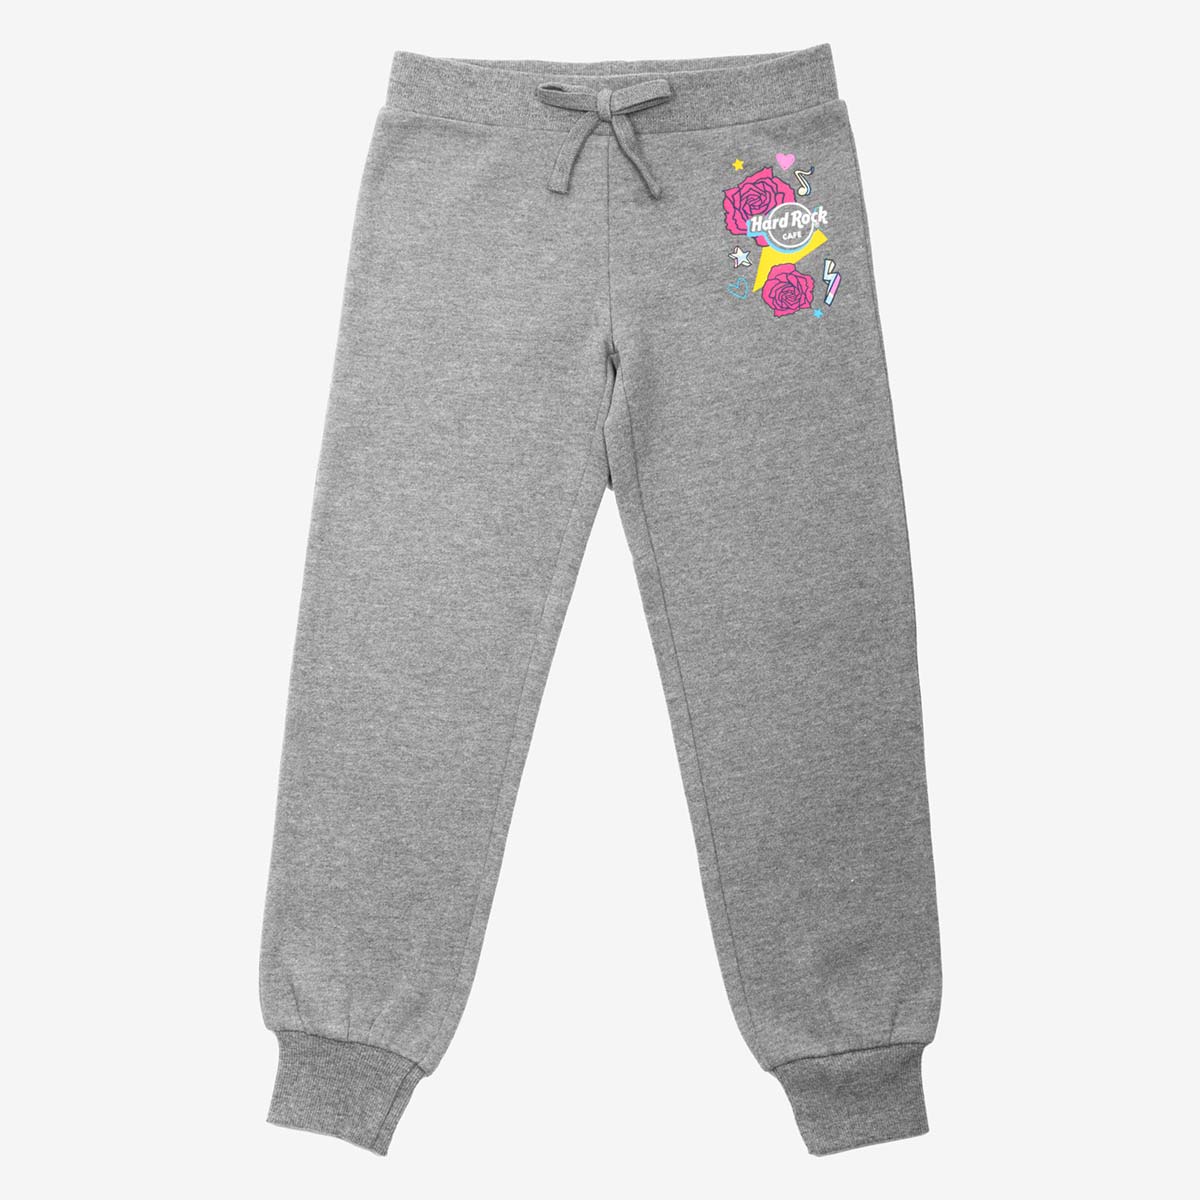 Rock Kids Jogger Pants in Grey with Rose Design image number 1